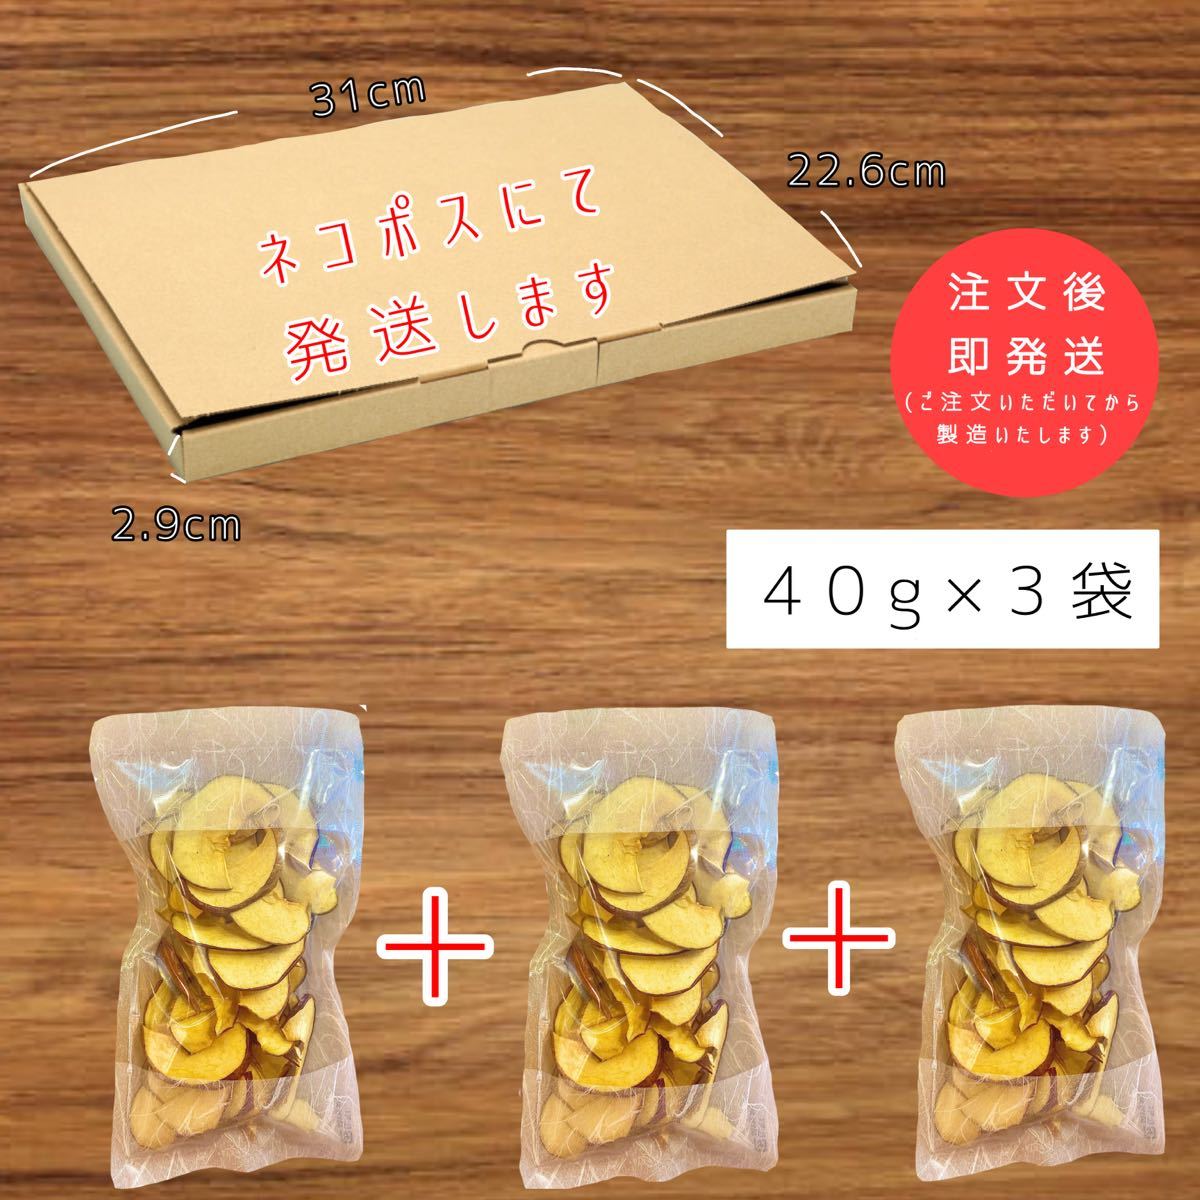 [3 sack ] Aomori prefecture production apple chip s sun ..120g no addition dried fruit dry apple apple chip s sugar un- use 